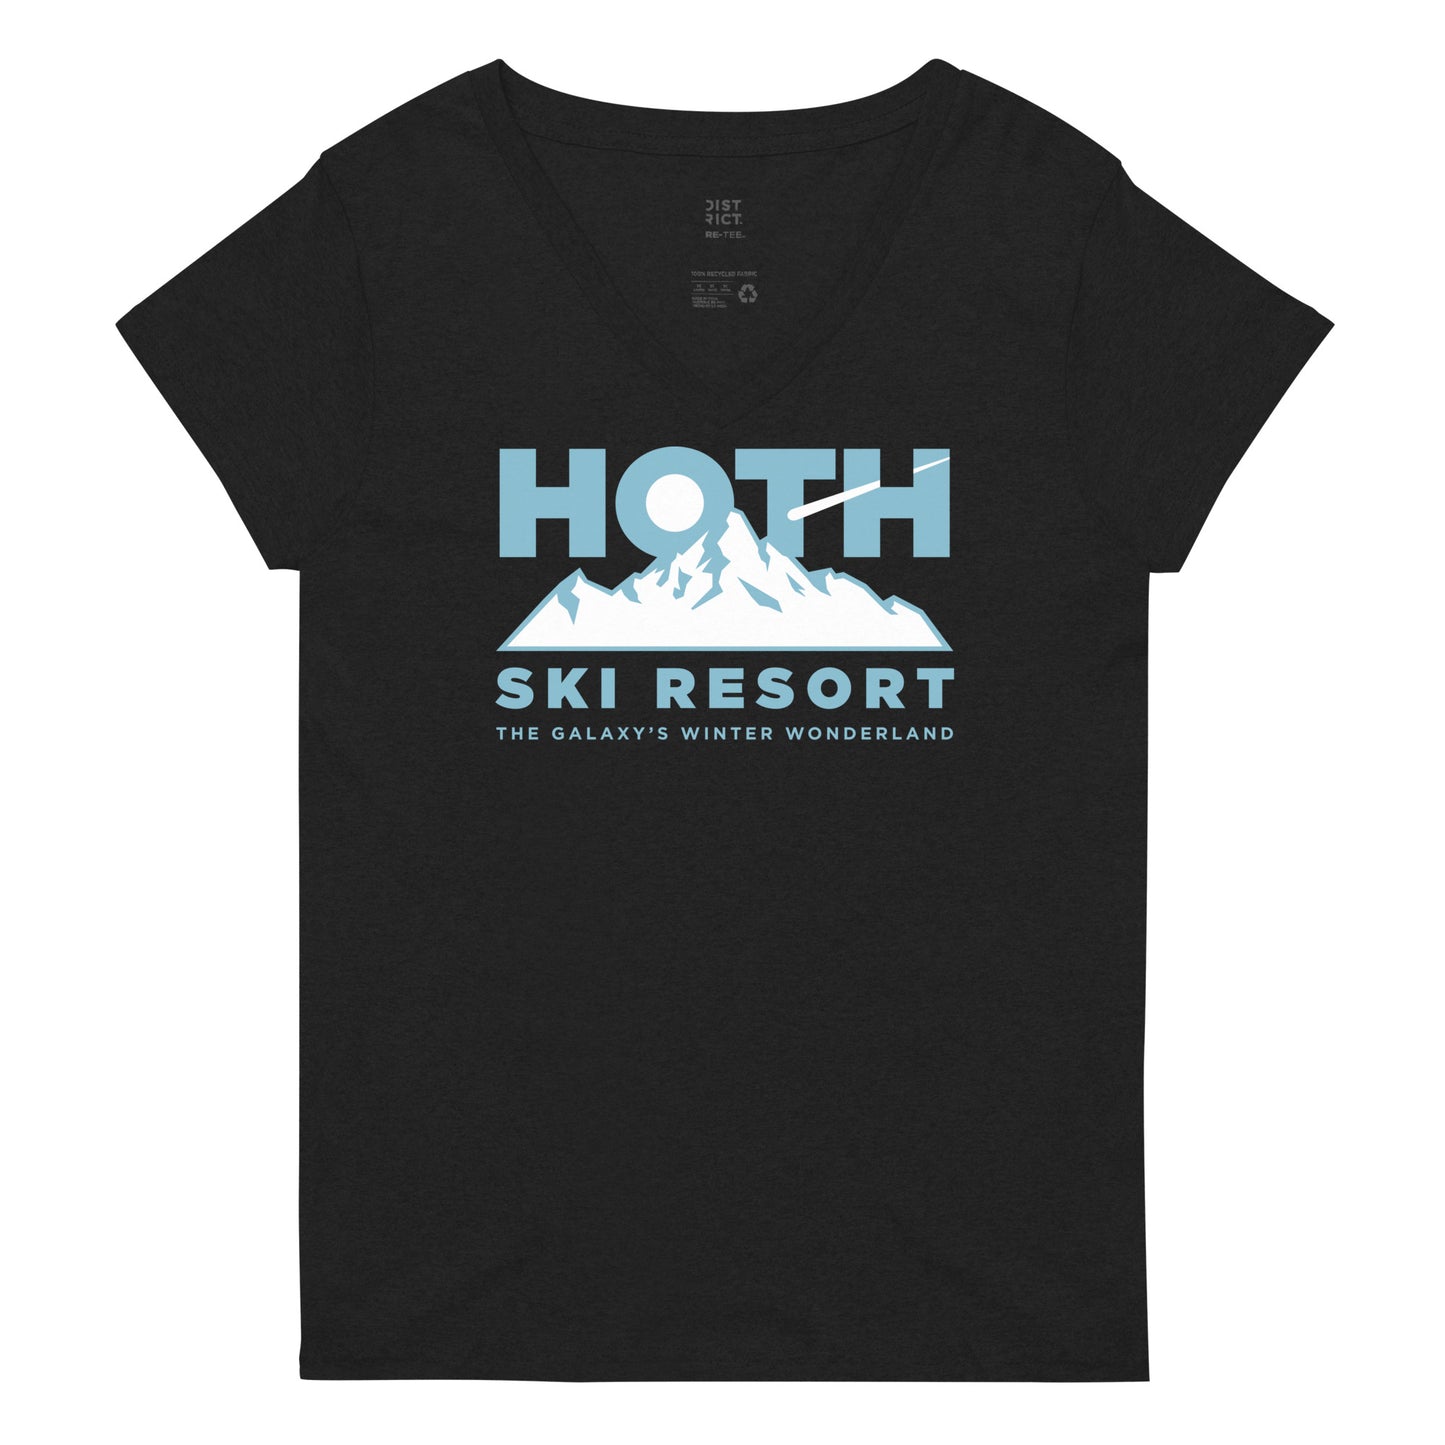 Hoth Ski Resort Women's V-Neck Tee